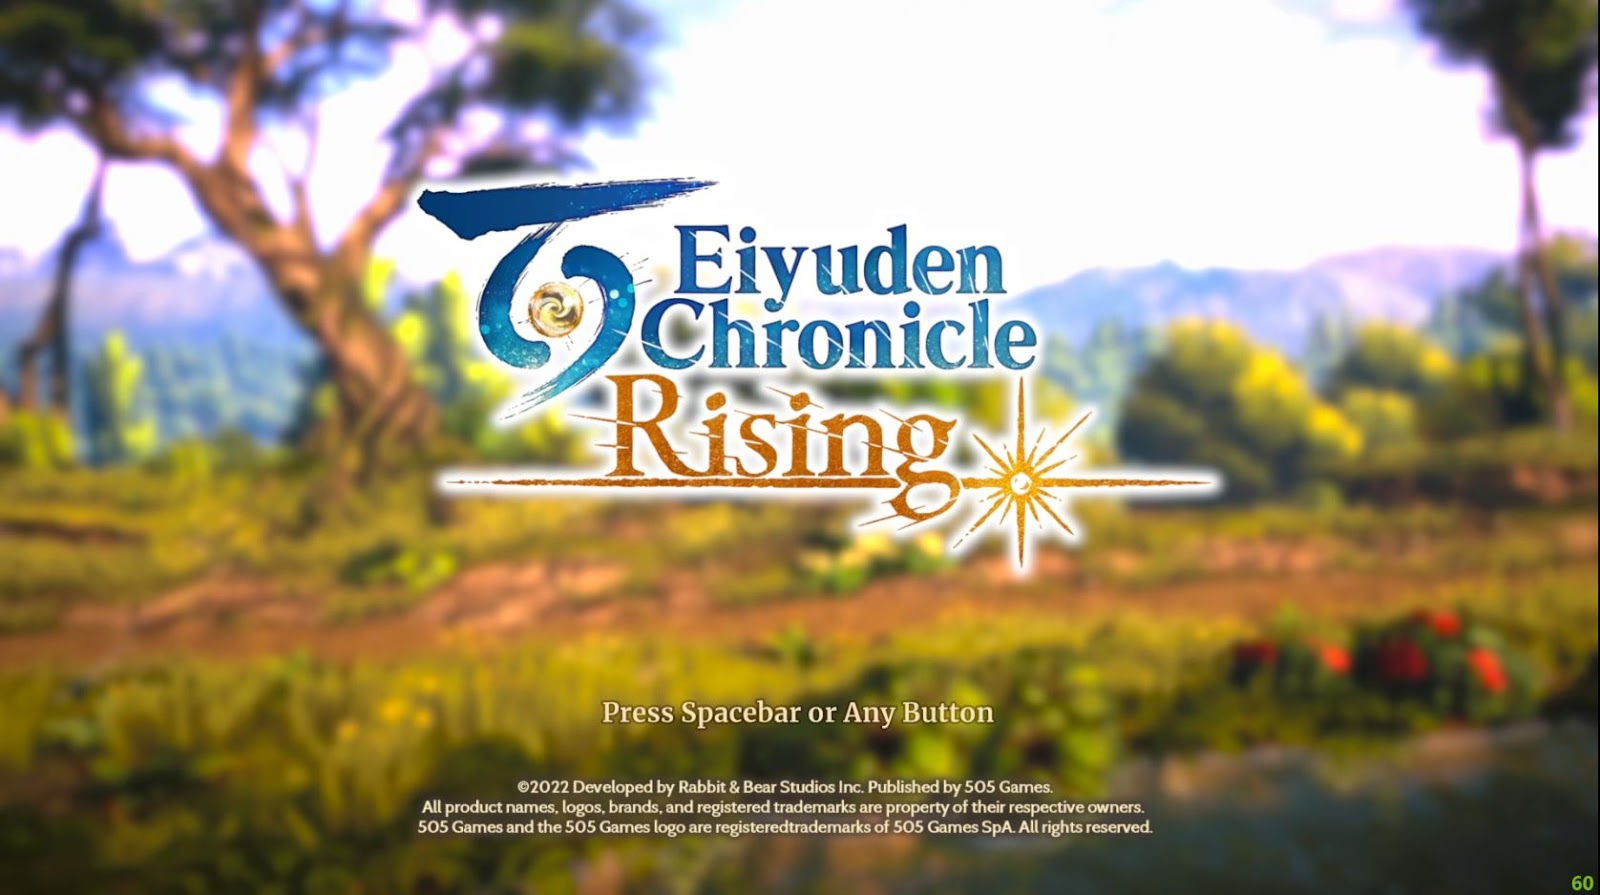 What A Pretty Title Screen! | Eiyuden Chronicle: Rising | 505 Games, Natsume Atari and R&B